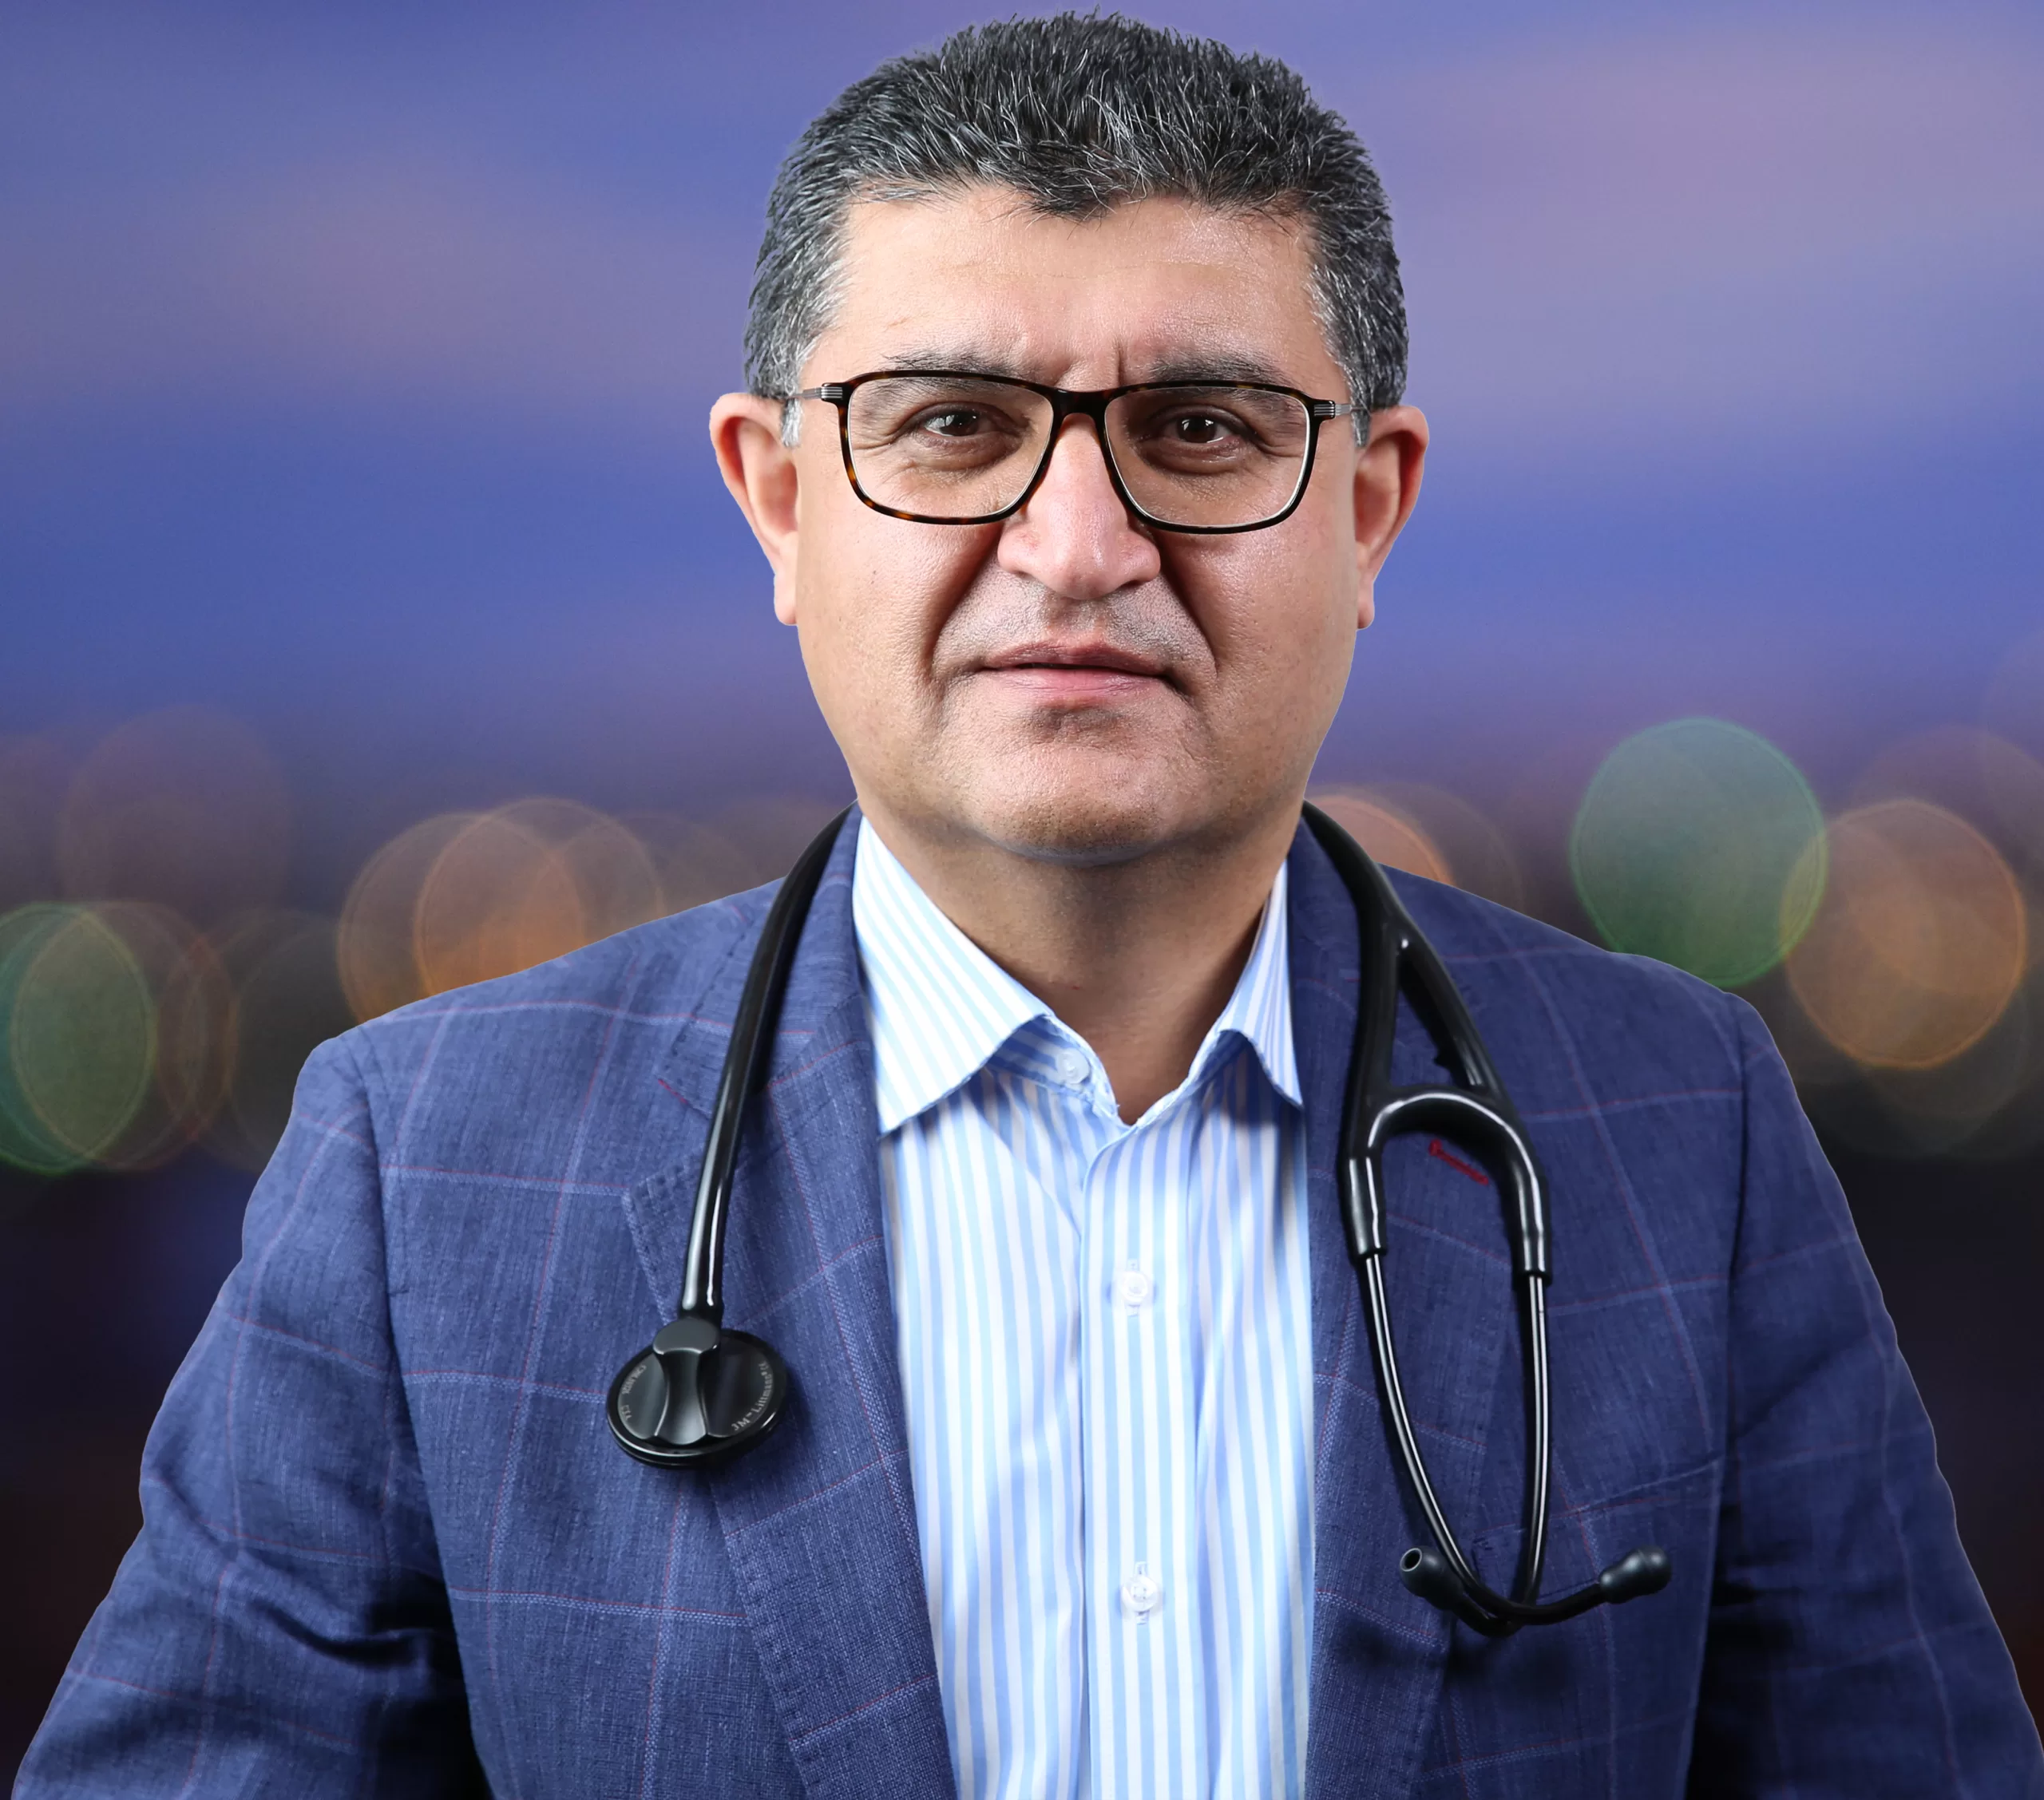 Dr Ahmed Khan